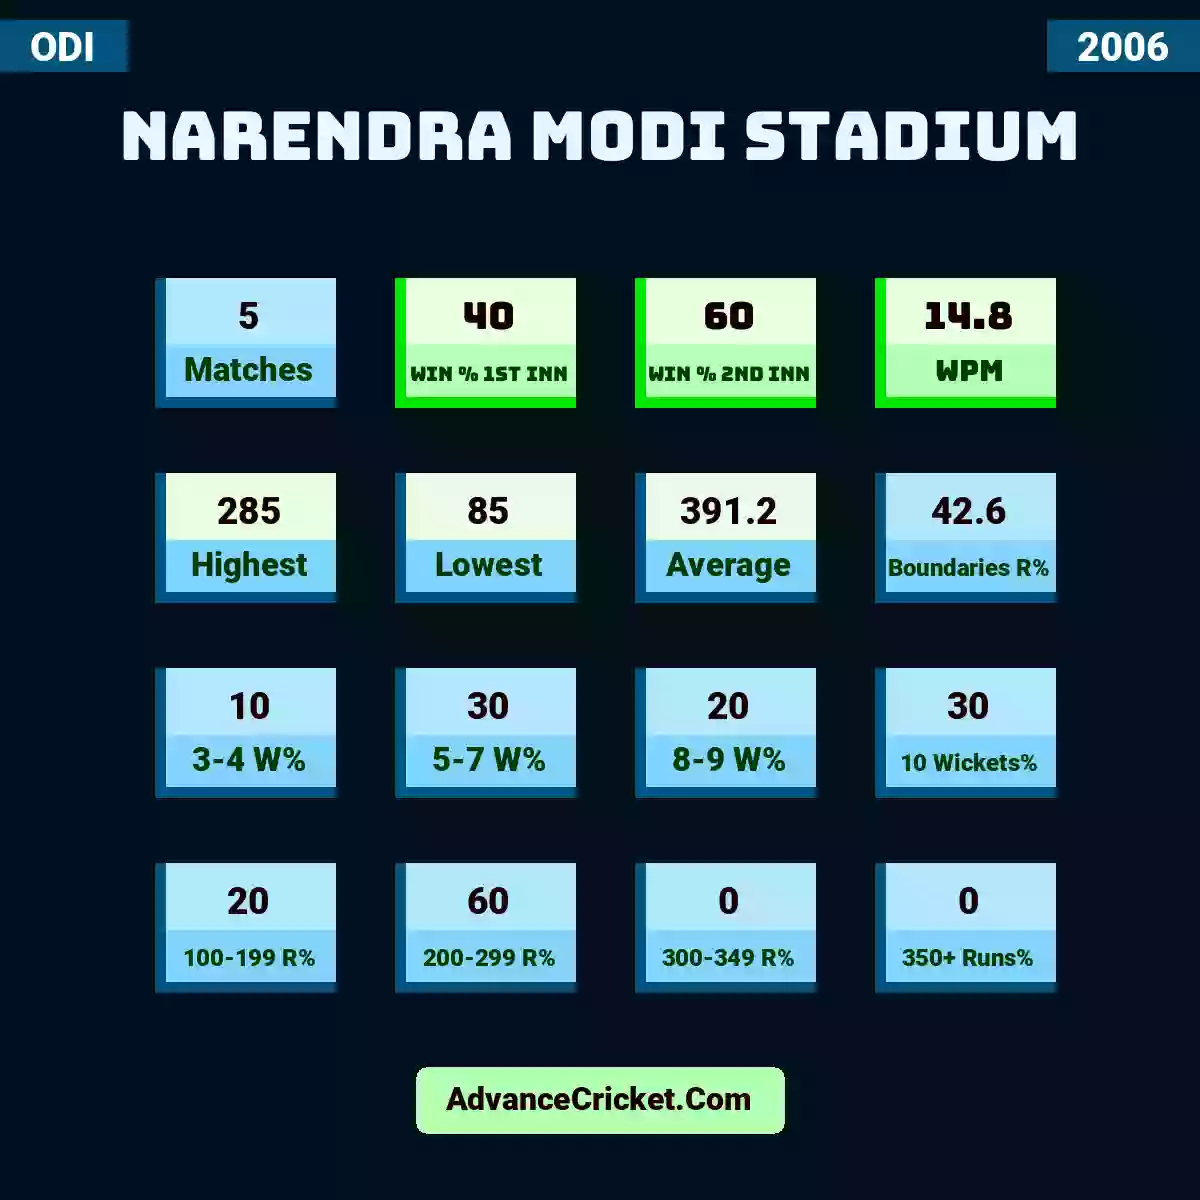 Image showing Narendra Modi Stadium with Matches: 5, Win % 1st Inn: 40, Win % 2nd Inn: 60, WPM: 14.8, Highest: 285, Lowest: 85, Average: 391.2, Boundaries R%: 42.6, 3-4 W%: 10, 5-7 W%: 30, 8-9 W%: 20, 10 Wickets%: 30, 100-199 R%: 20, 200-299 R%: 60, 300-349 R%: 0, 350+ Runs%: 0.